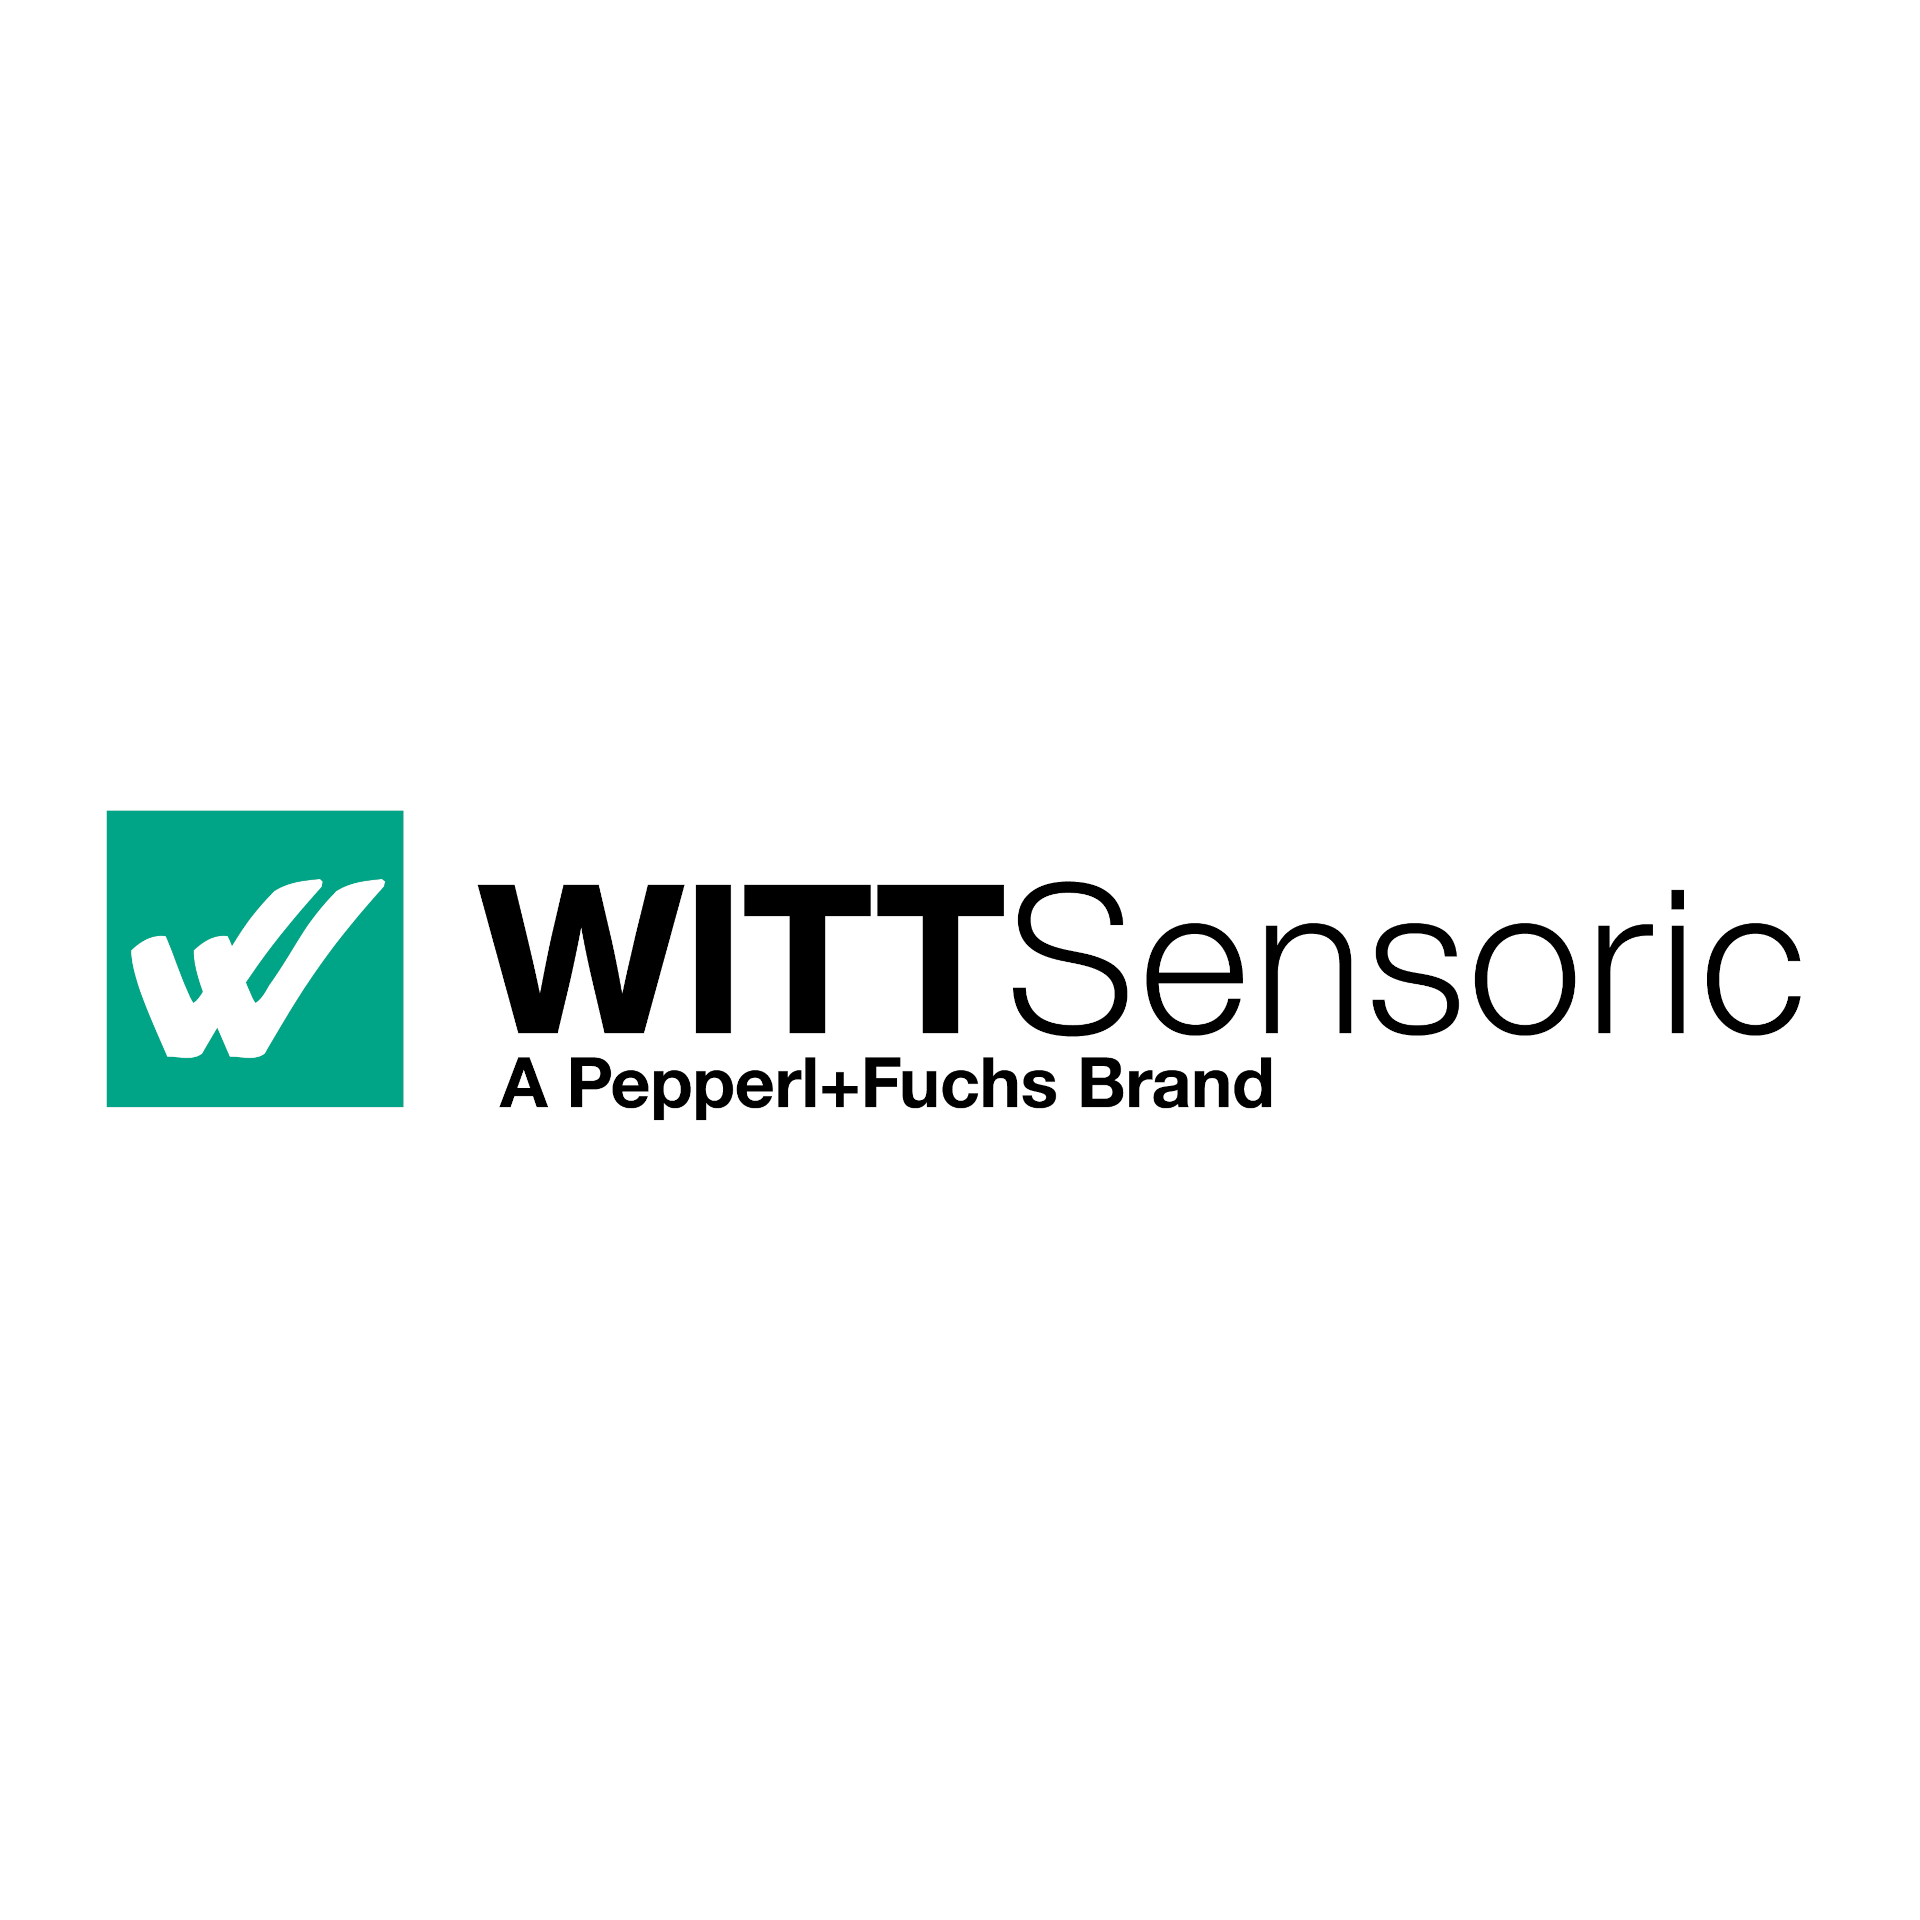 WITT Sensoric—The Pepperl+Fuchs Brand for Gate Automation